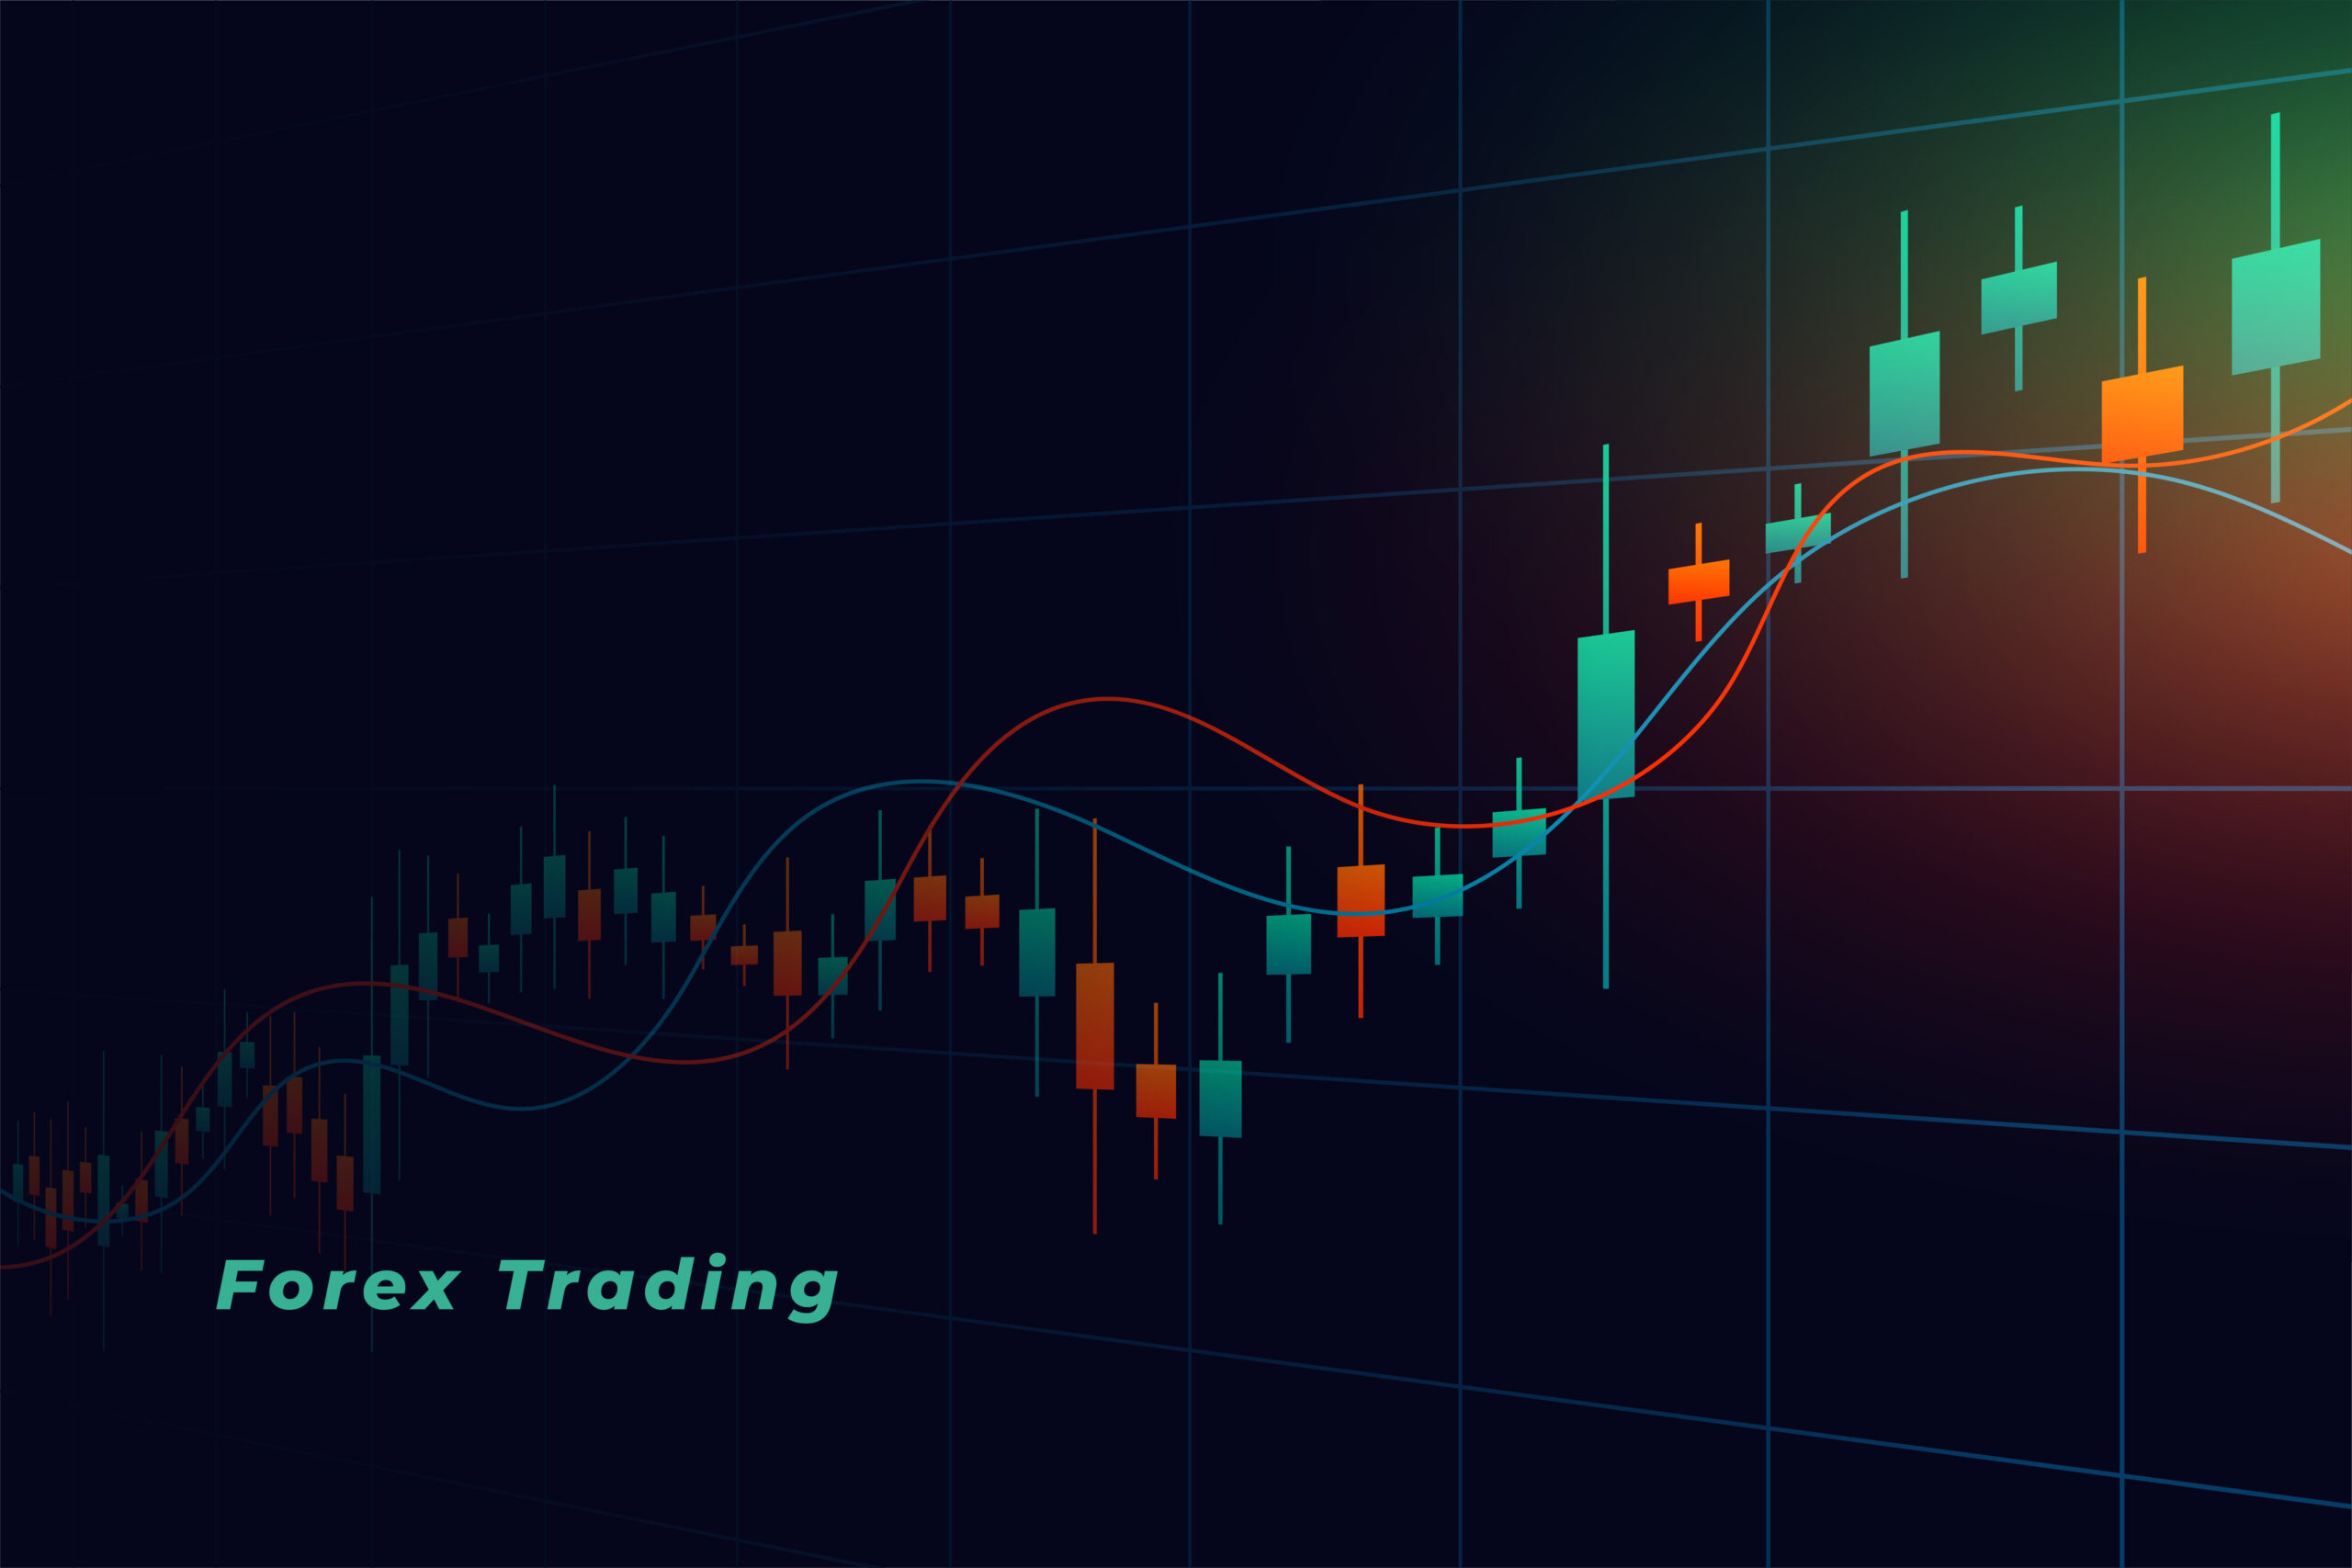 Forex Trading vs Stock Trading